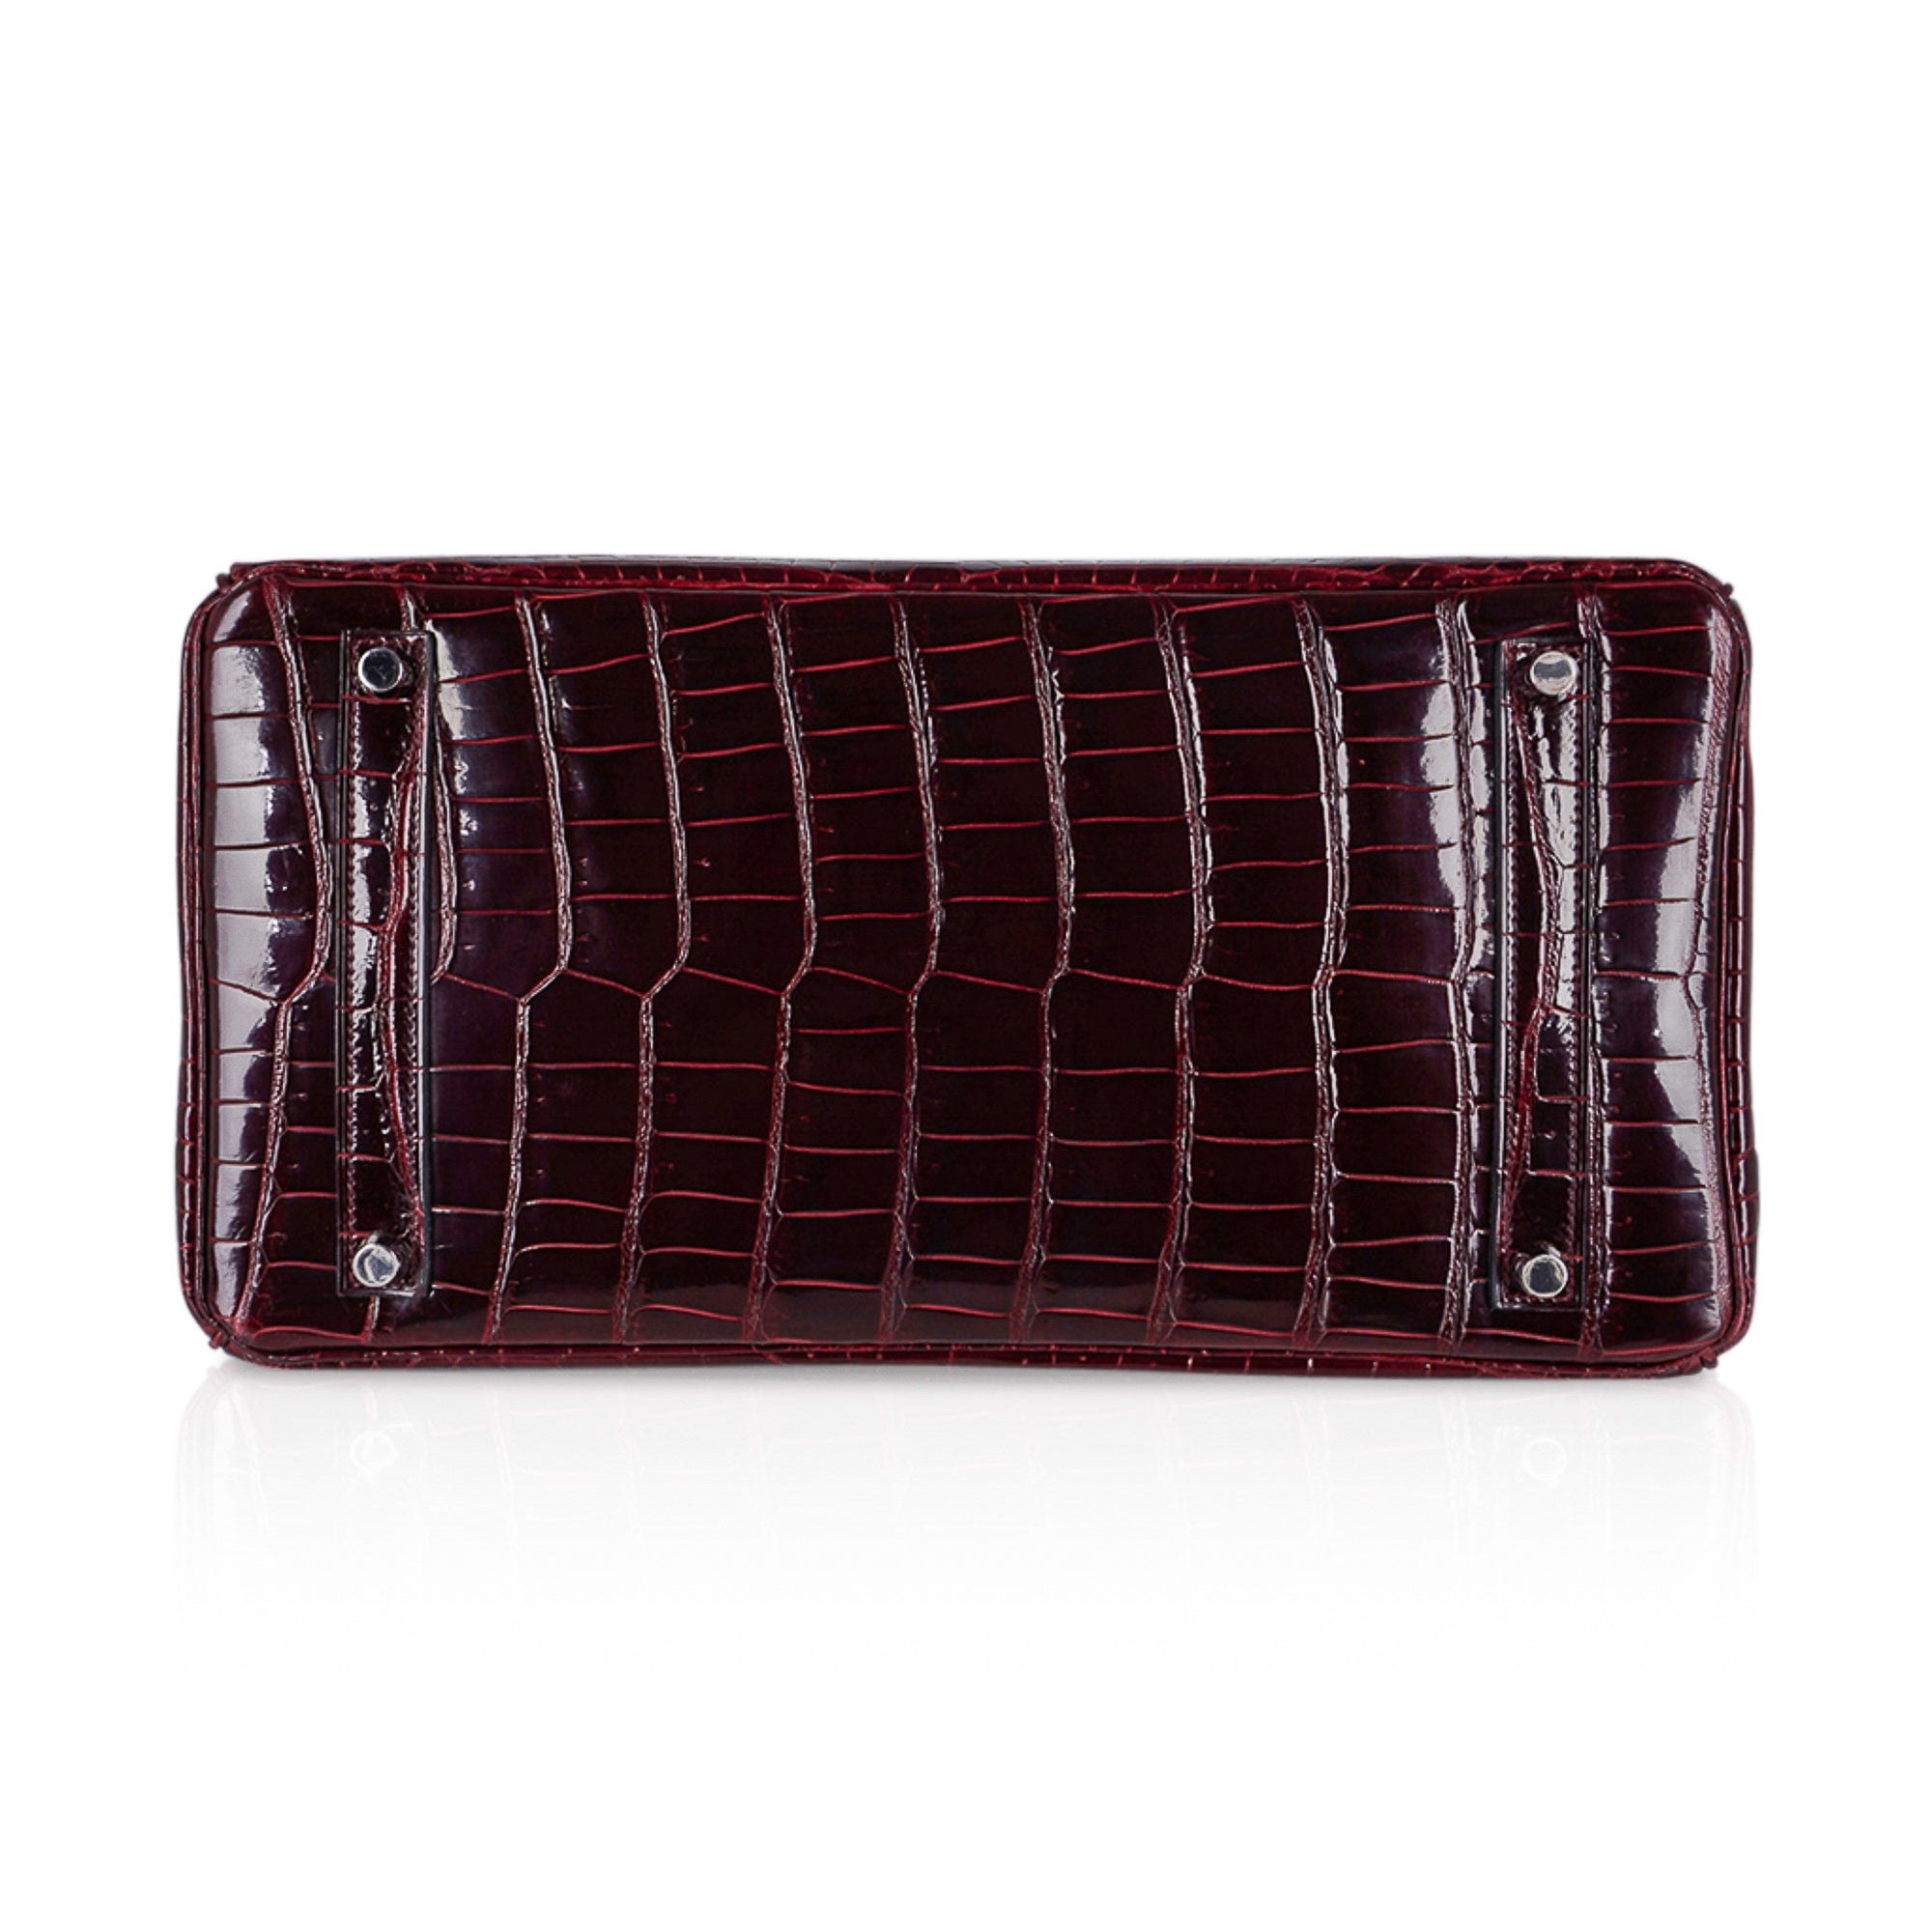 Hermès - Authenticated Birkin 35 Handbag - Crocodile Pink Crocodile for Women, Never Worn, with Tag